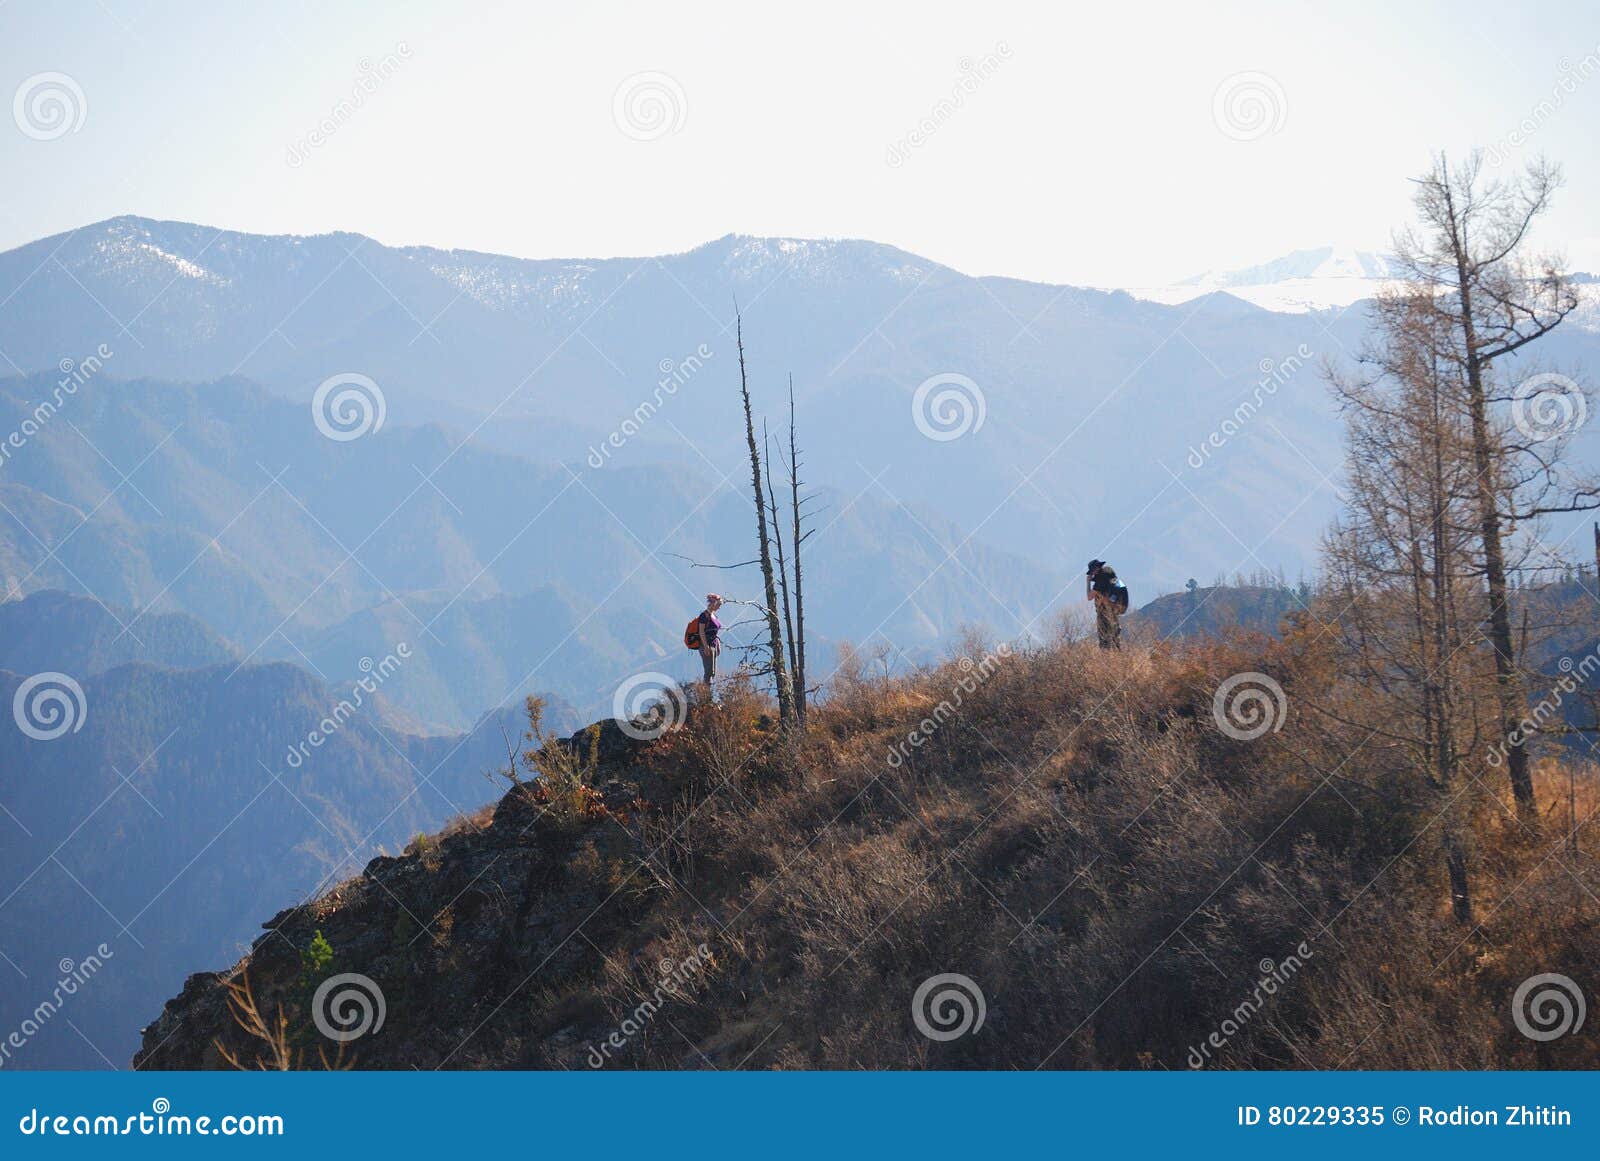 Mountain View in the Altai Mountains Stock Image - Image of siberia ...